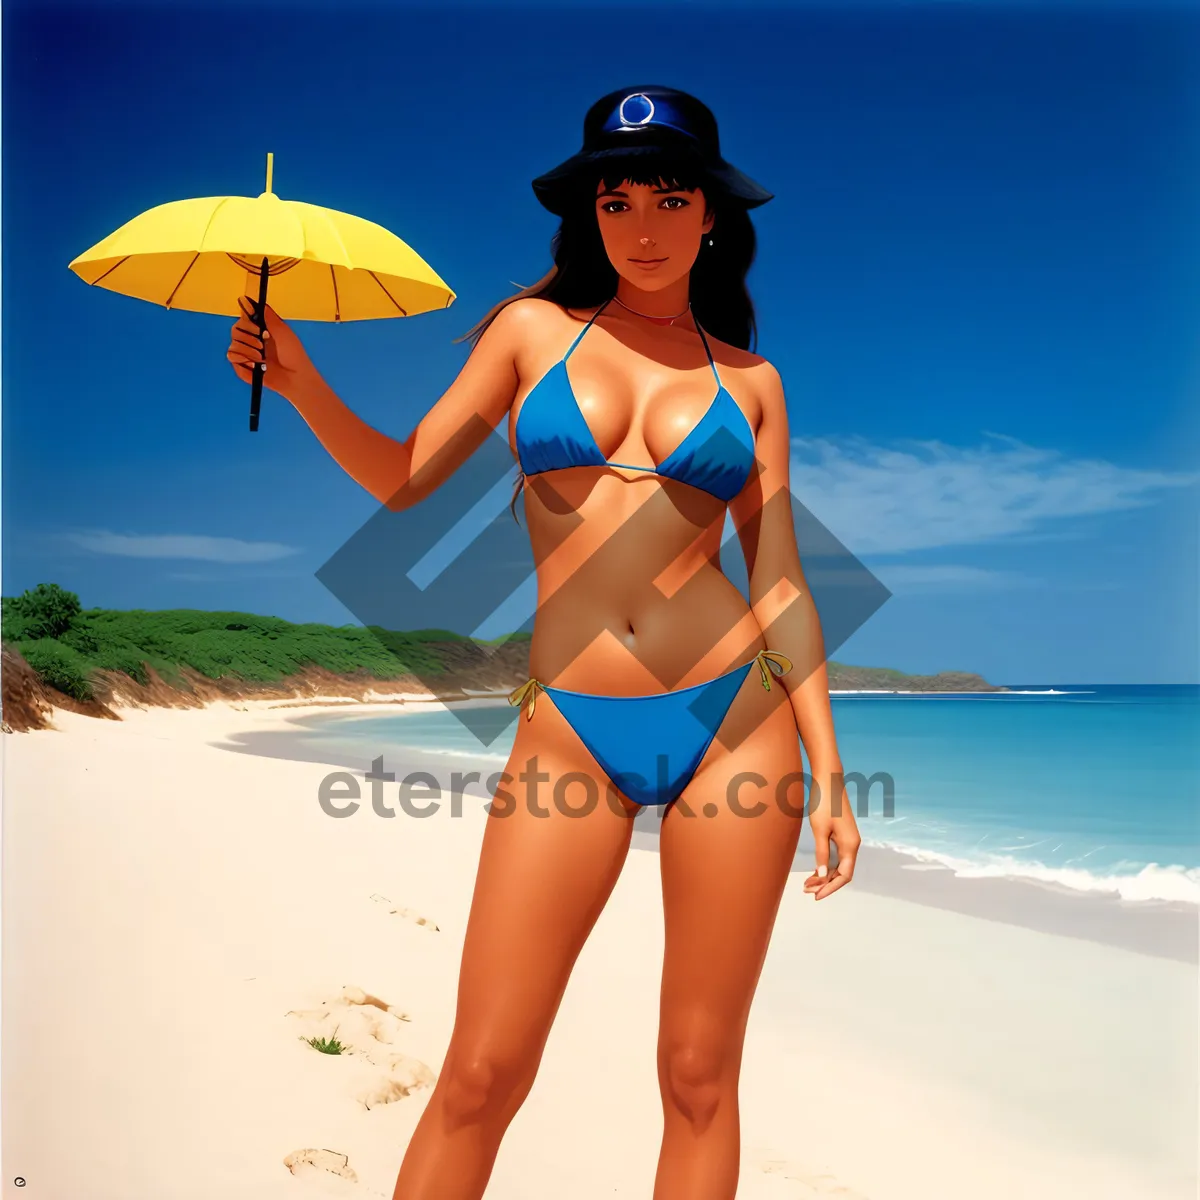 Picture of Summer Paradise: Attractive Bikini Beachwear on Exotic Sand